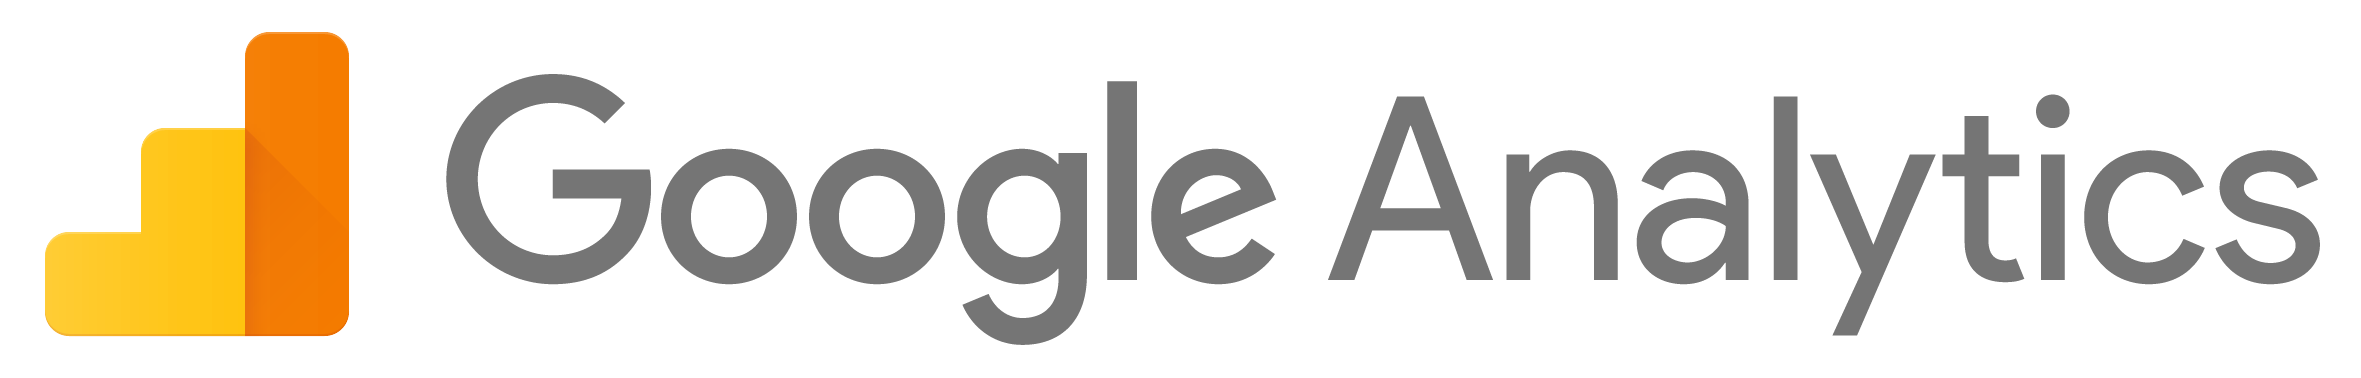 File logo wikimedia commons. Google analytics png